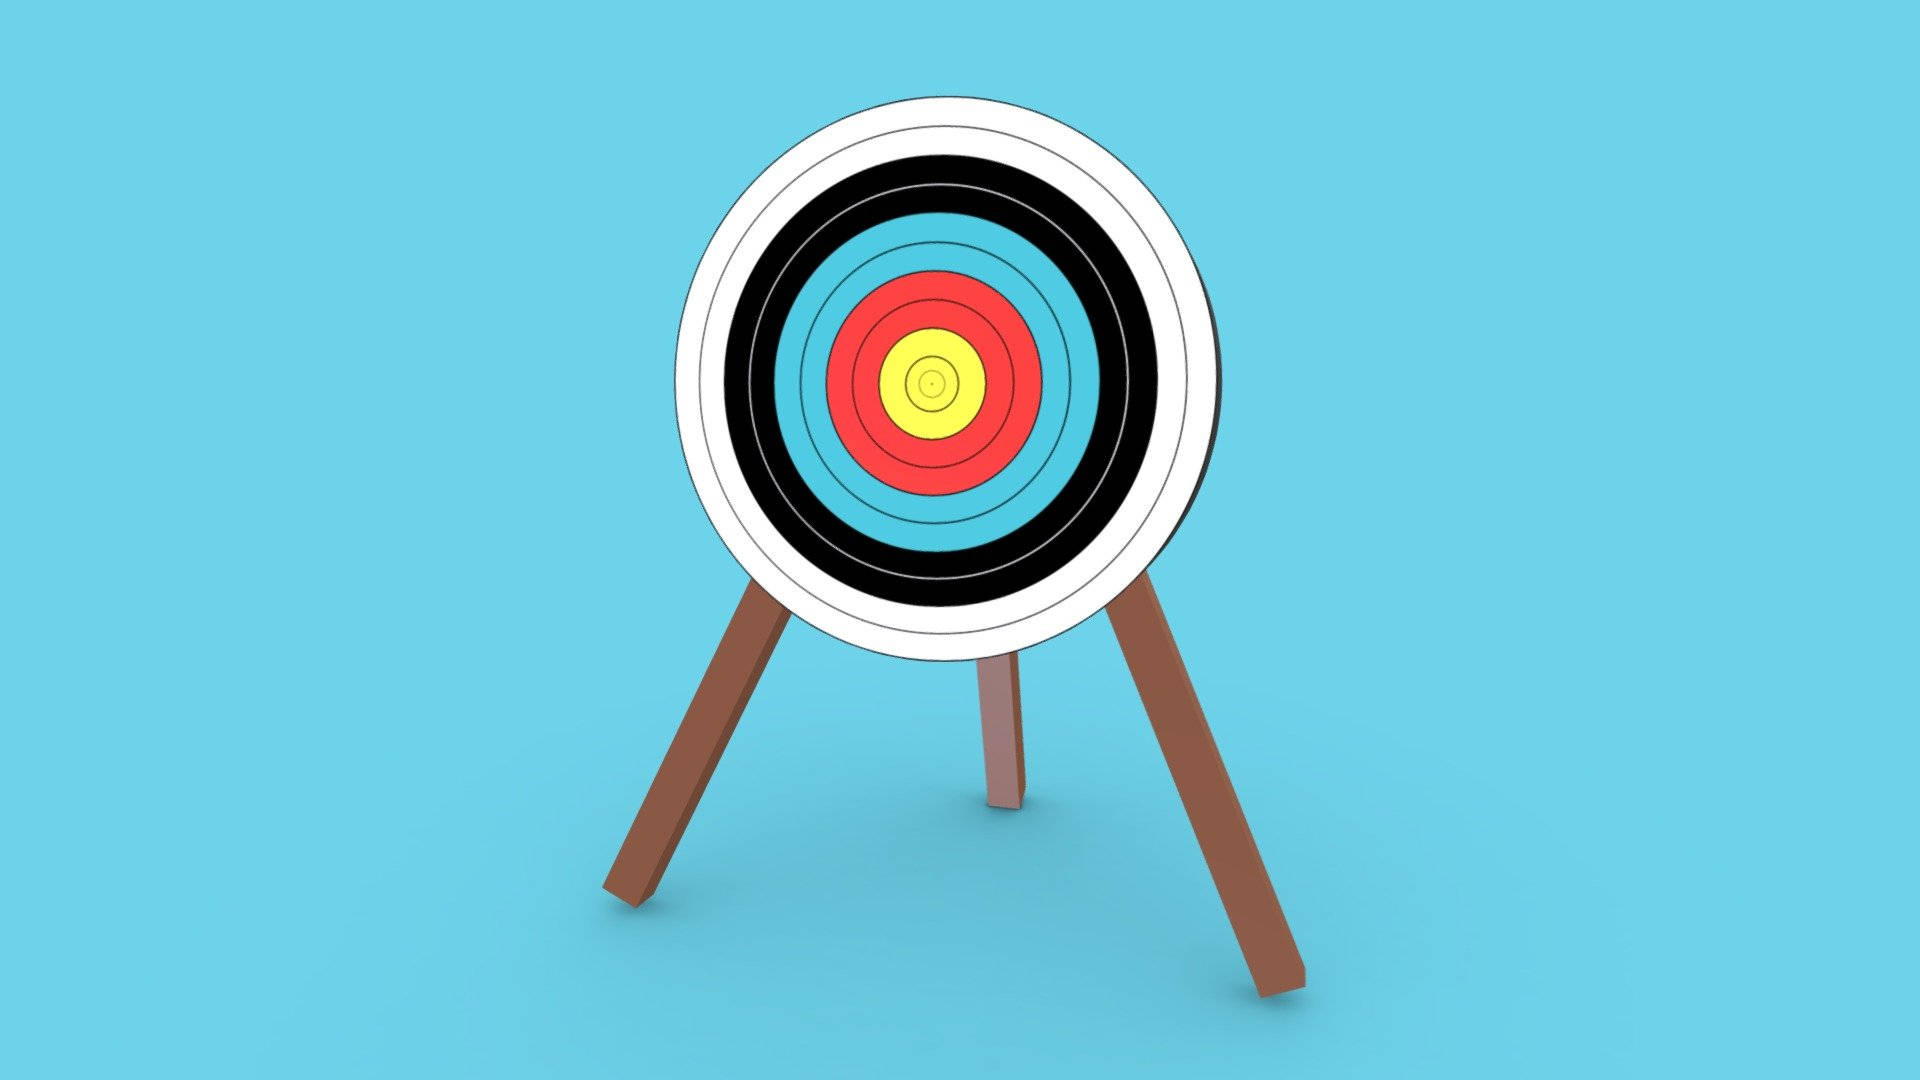 Minimal Archery Target Board Wallpaper